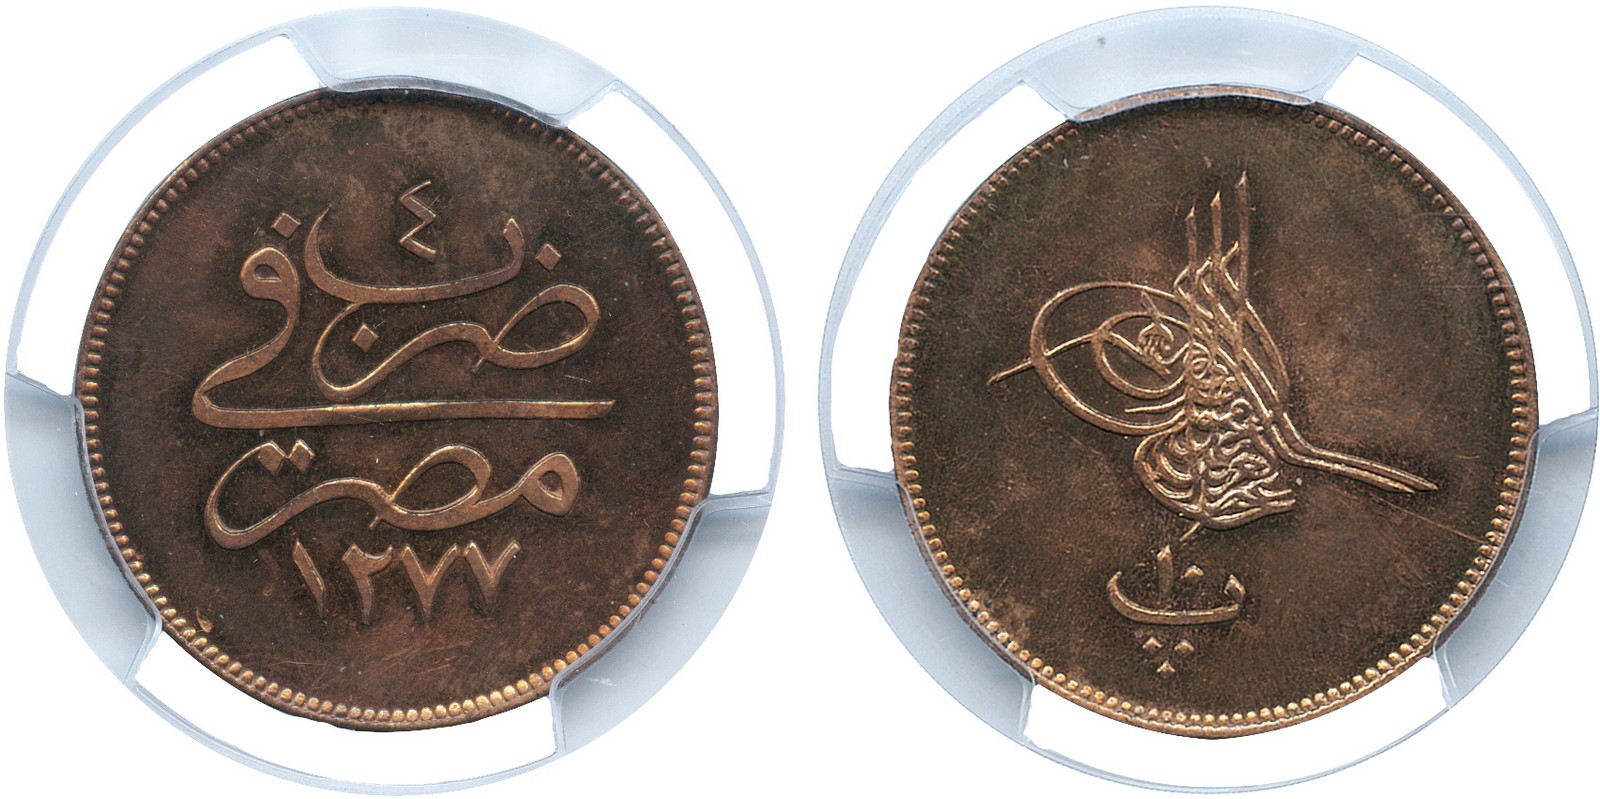 WORLD COINS, Turkey, Abdul Aziz (1861-1876), Copper 10-Para, 1277h, Year 4 (KM 241). In PCGS